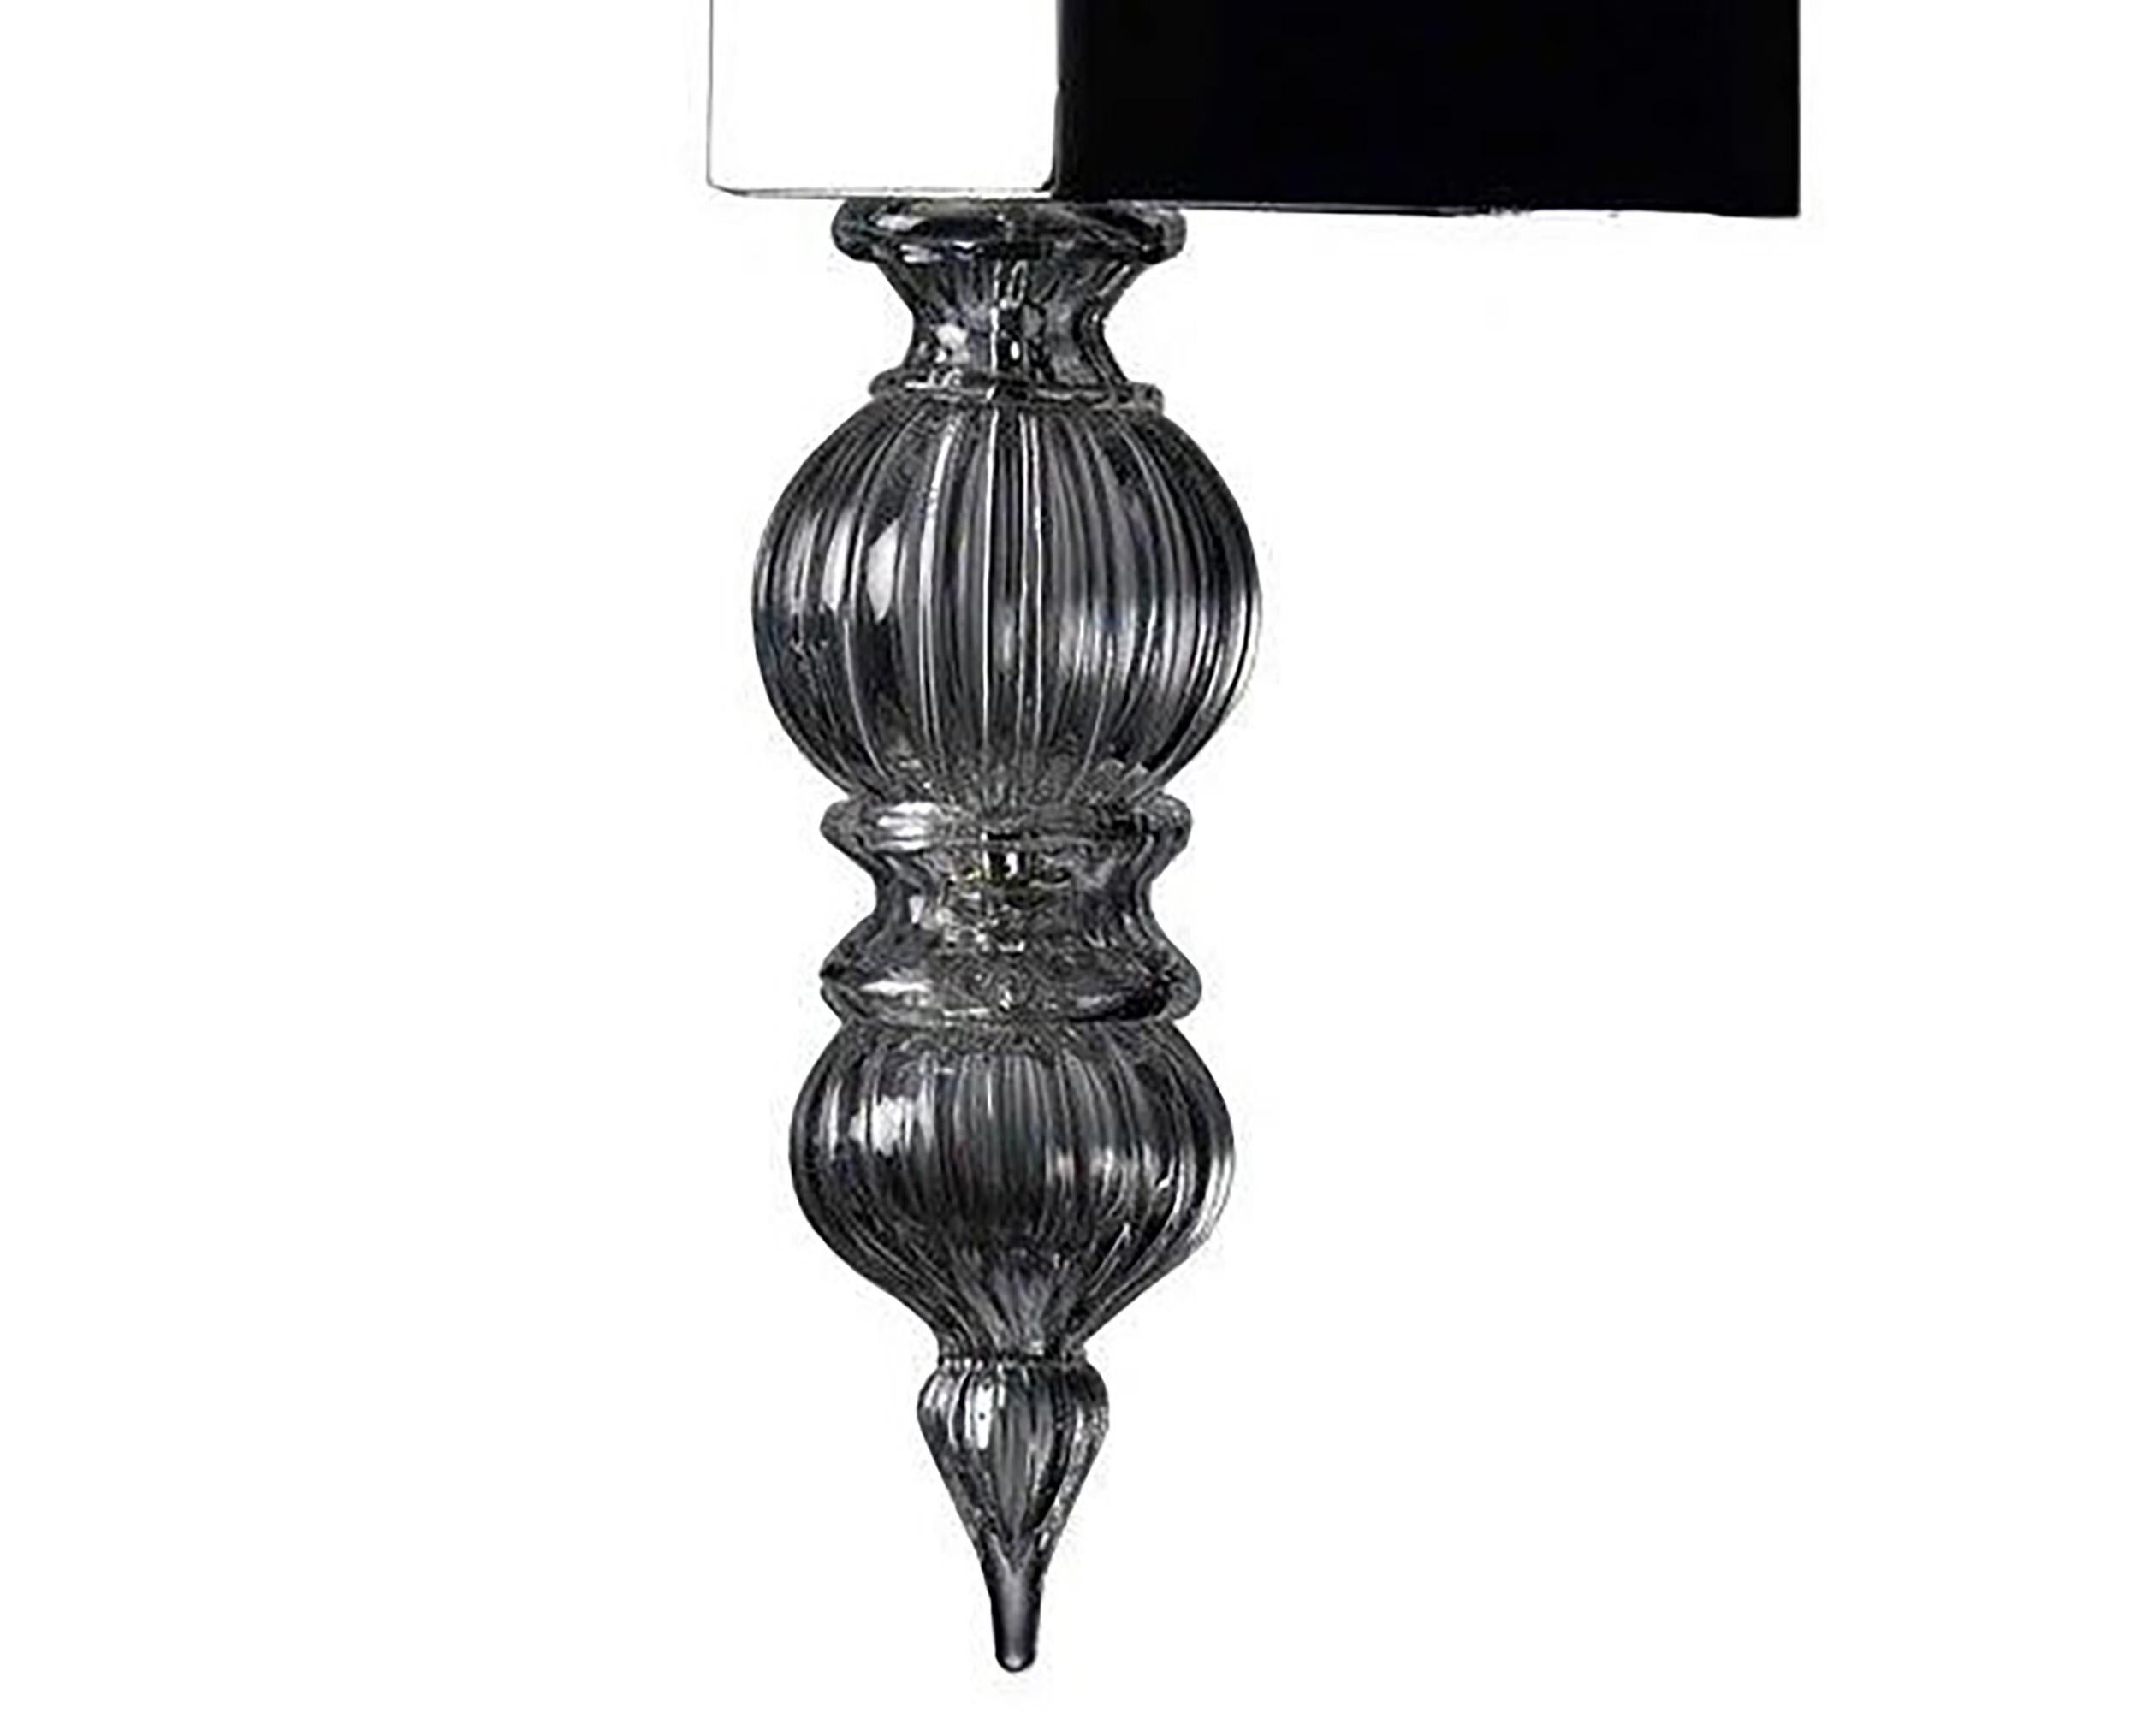 Fosfato Mazzega 1946 linear chandelier In Good Condition For Sale In Saint ouen, FR